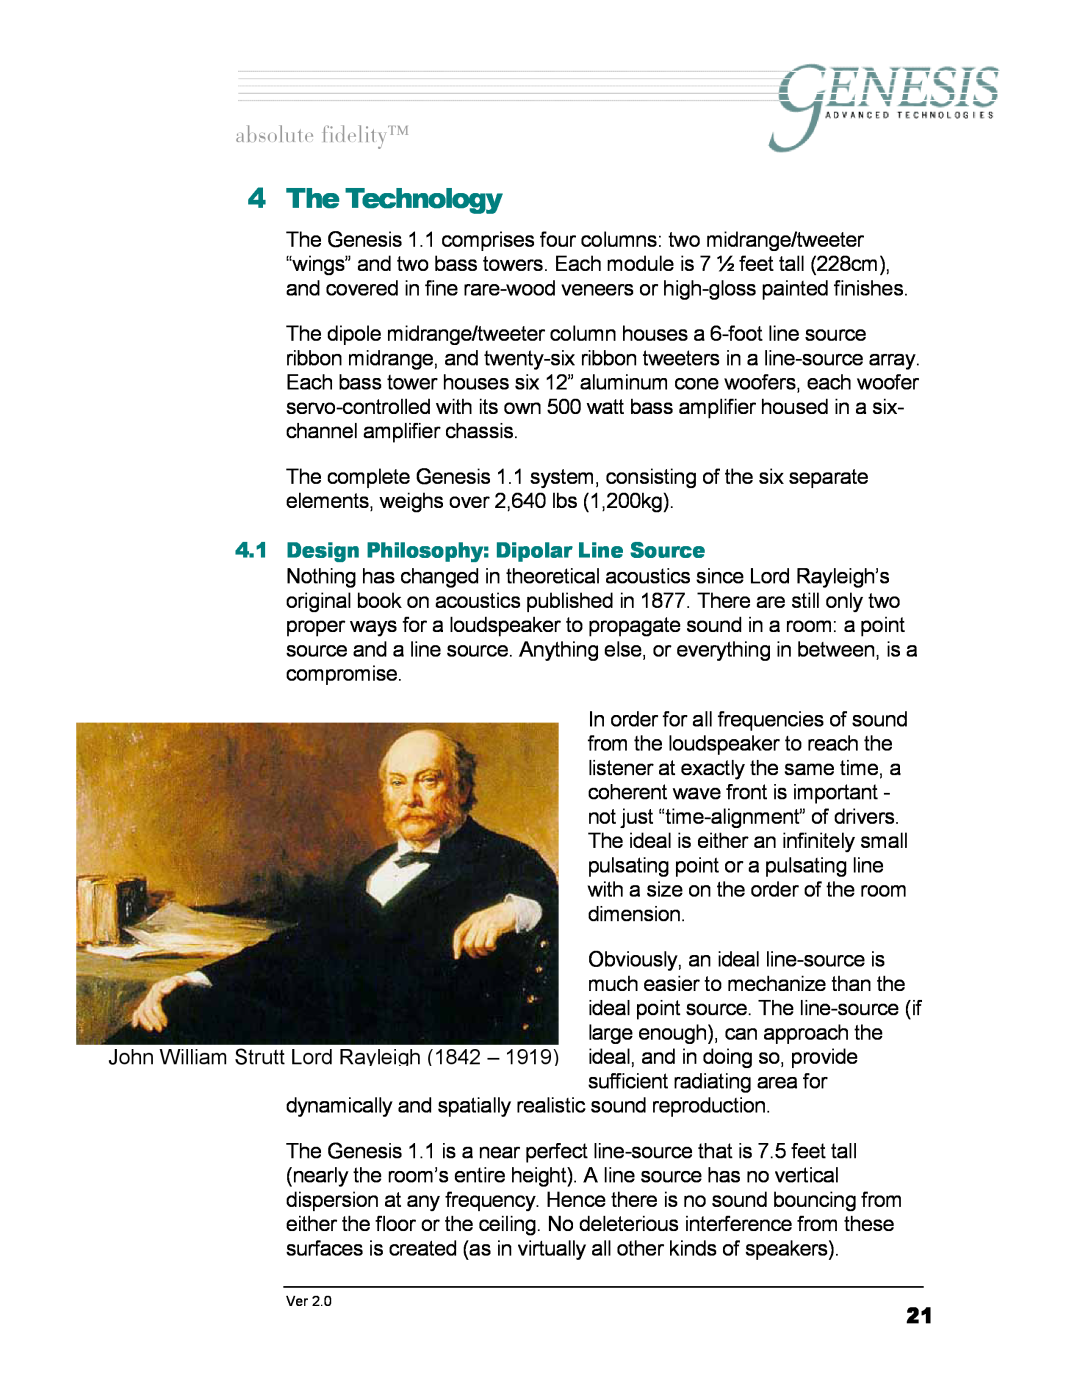 Genesis Advanced Technologies 1.1 owner manual The Technology, 4.1Design Philosophy Dipolar Line Source, ~ÄëçäìíÉ=ÑáÇÉäáíó 